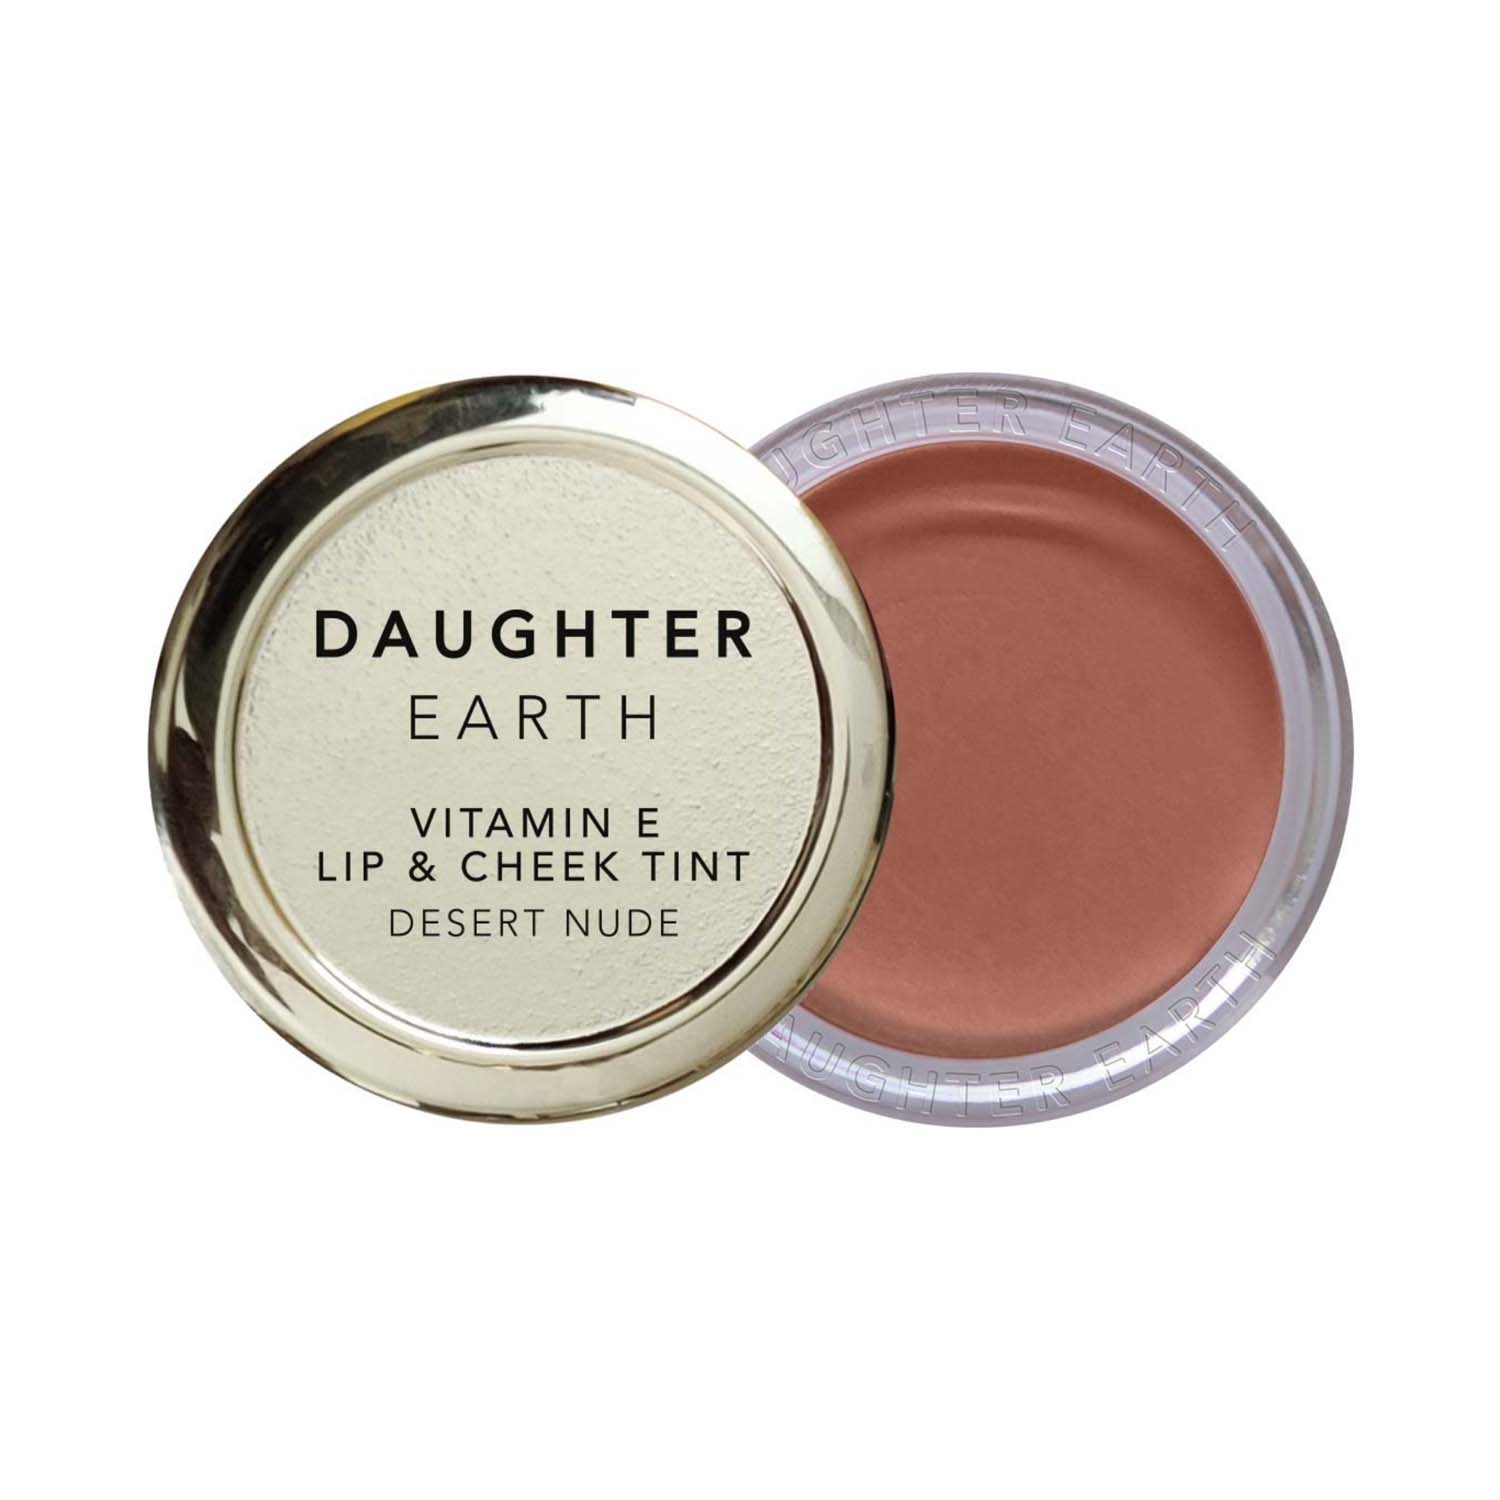  | DAUGHTER EARTH Vitamin E Lip & Cheek Tint - Desert Nude (4.5g)